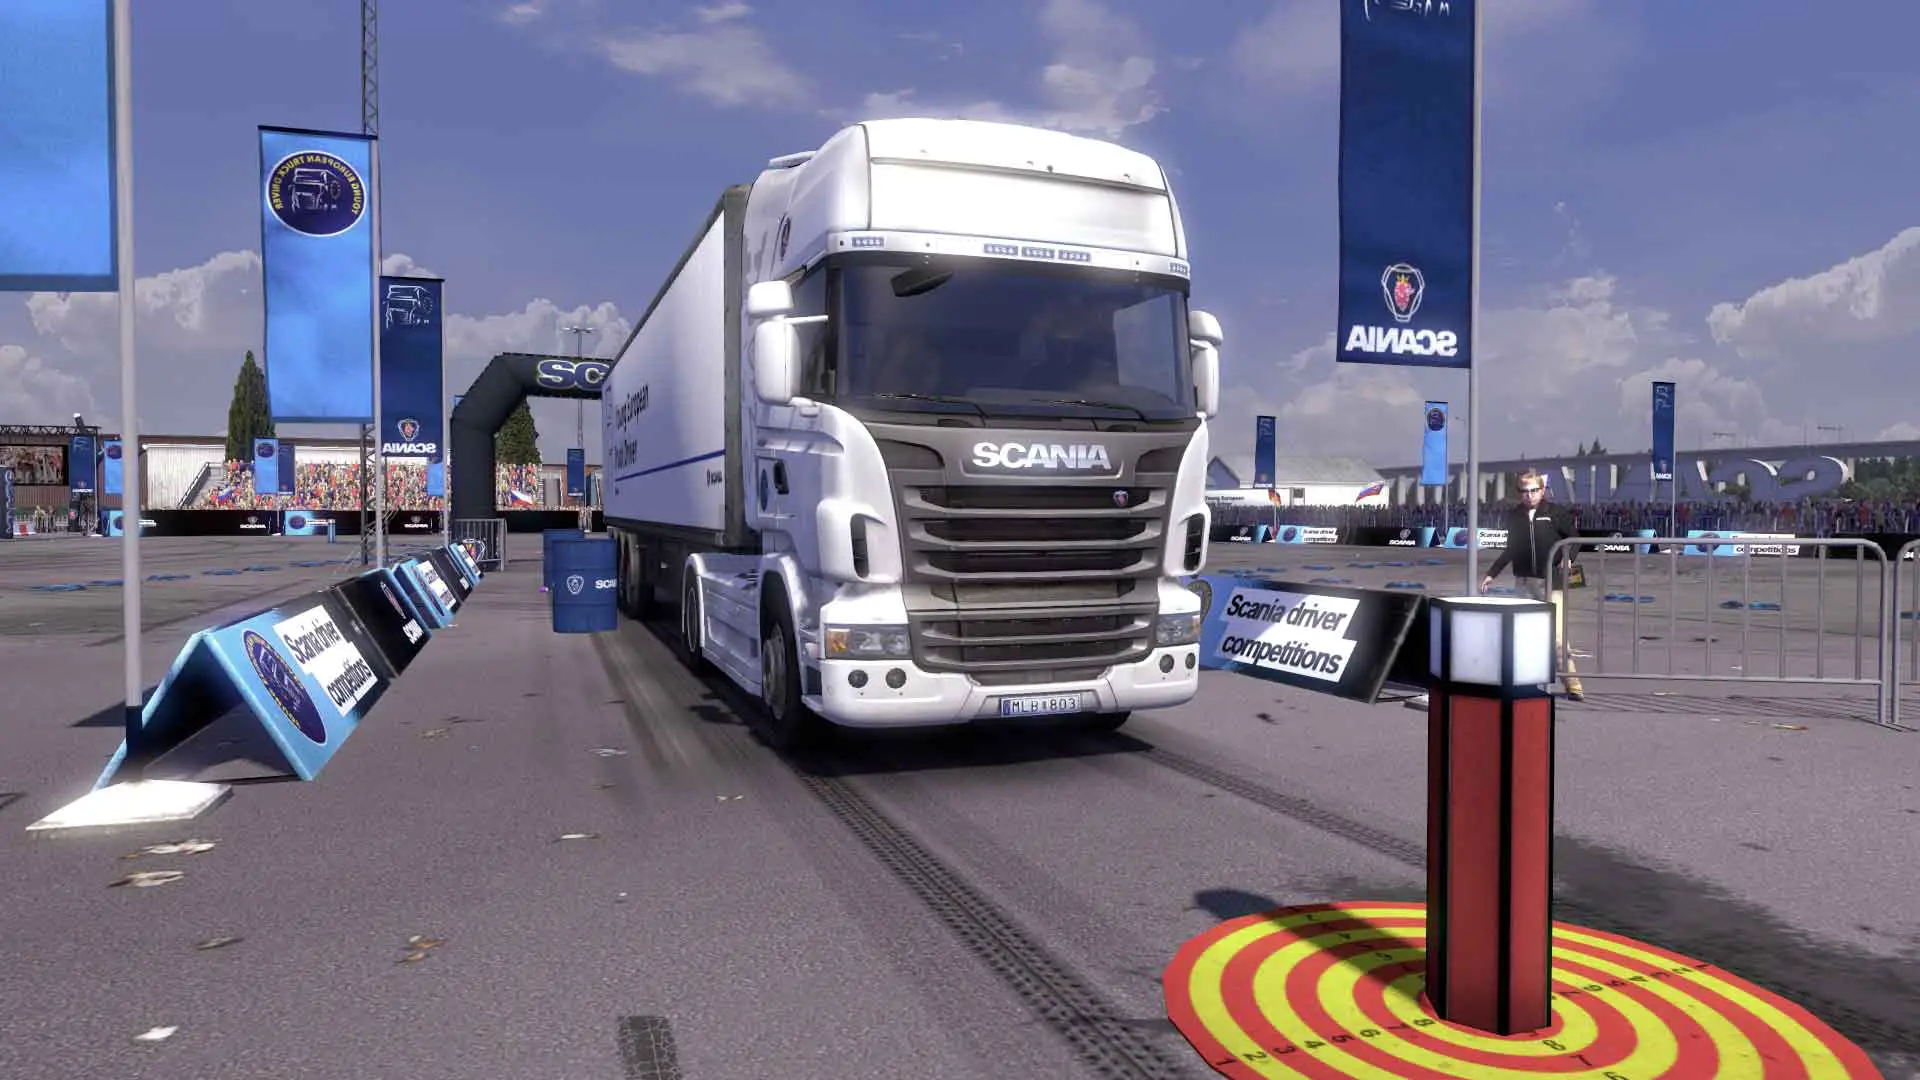 download game scania truck driving simulator